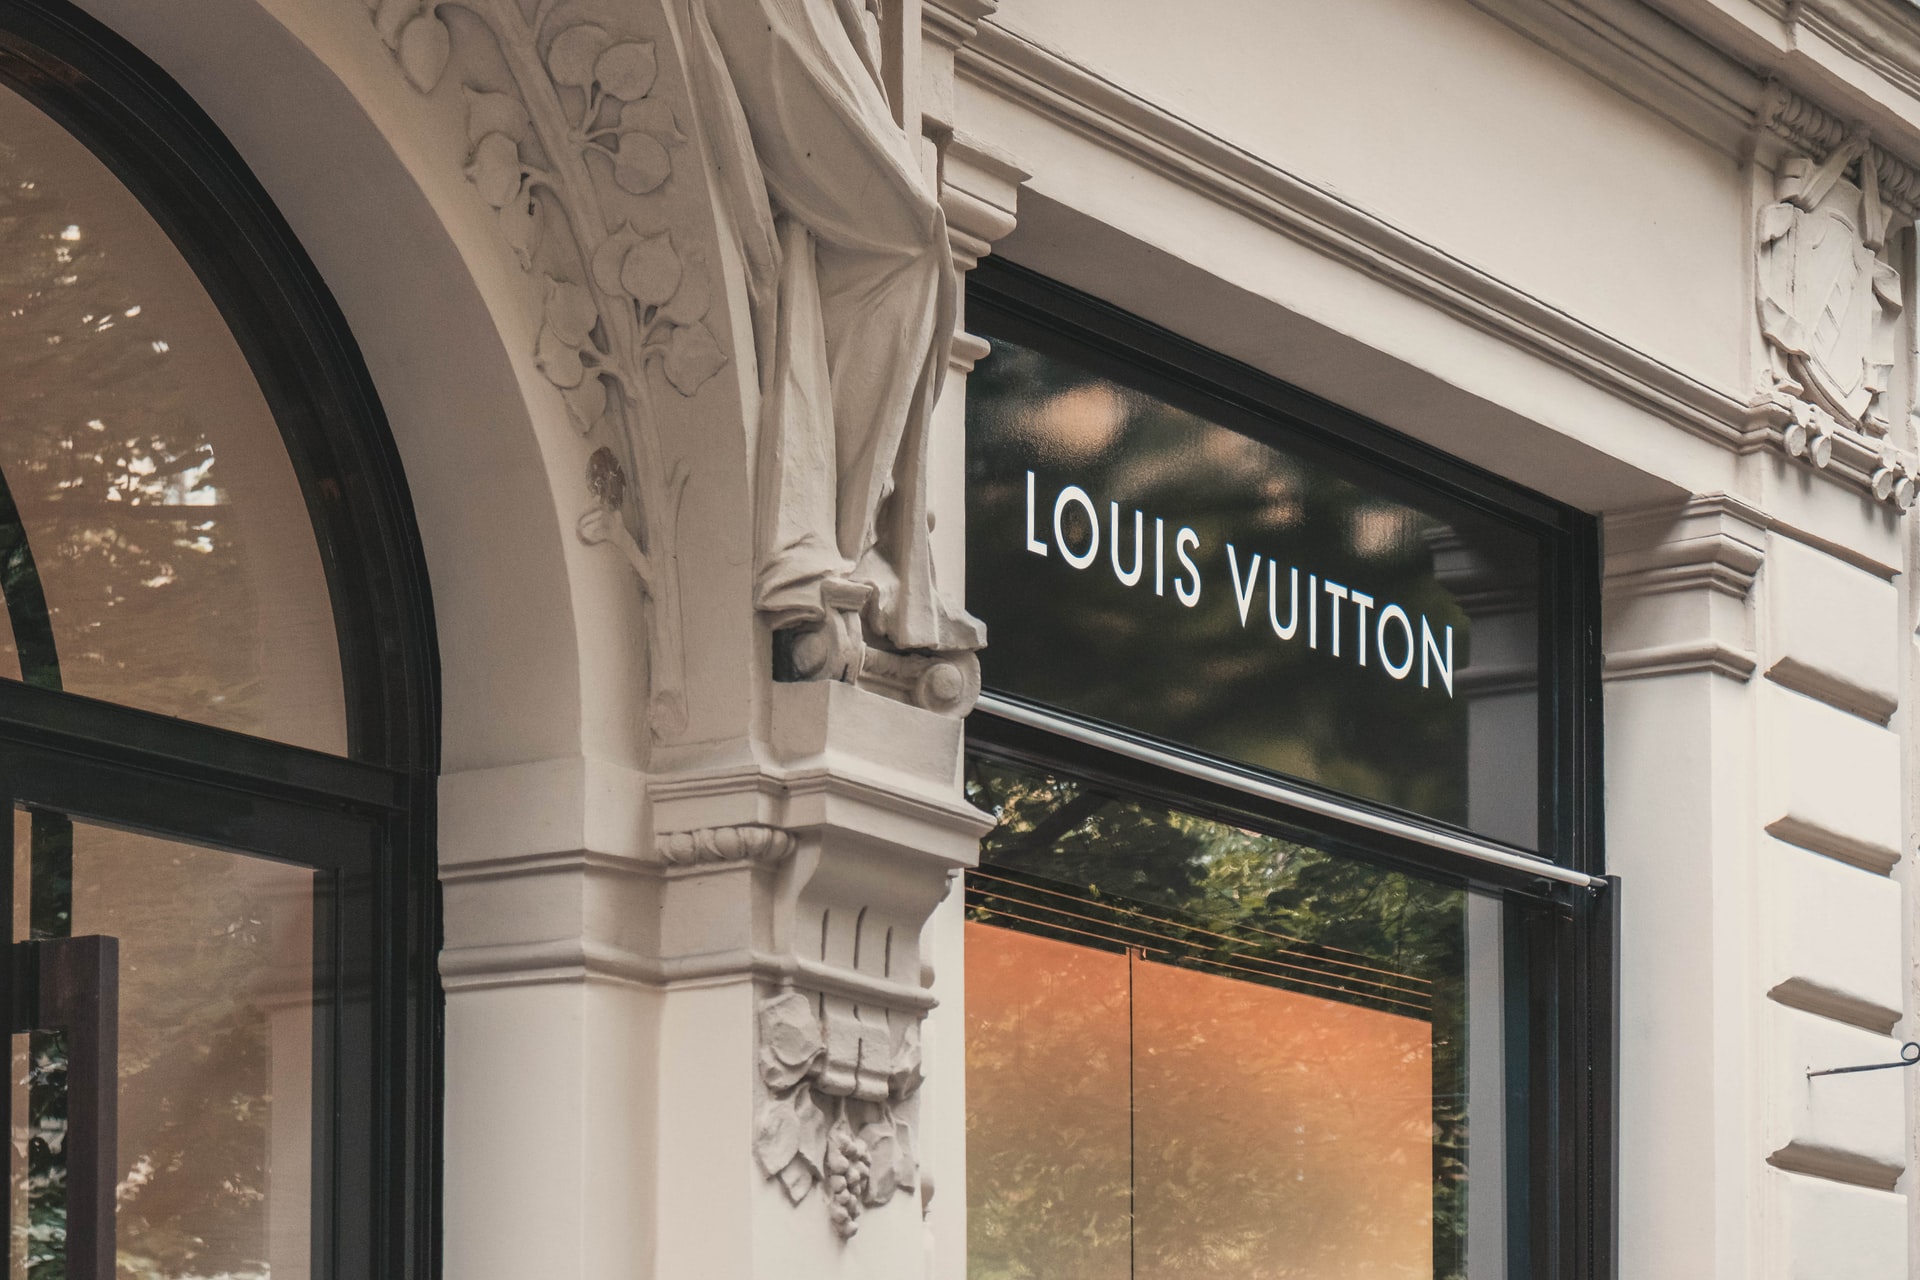 LVMH raises a glass to luxury